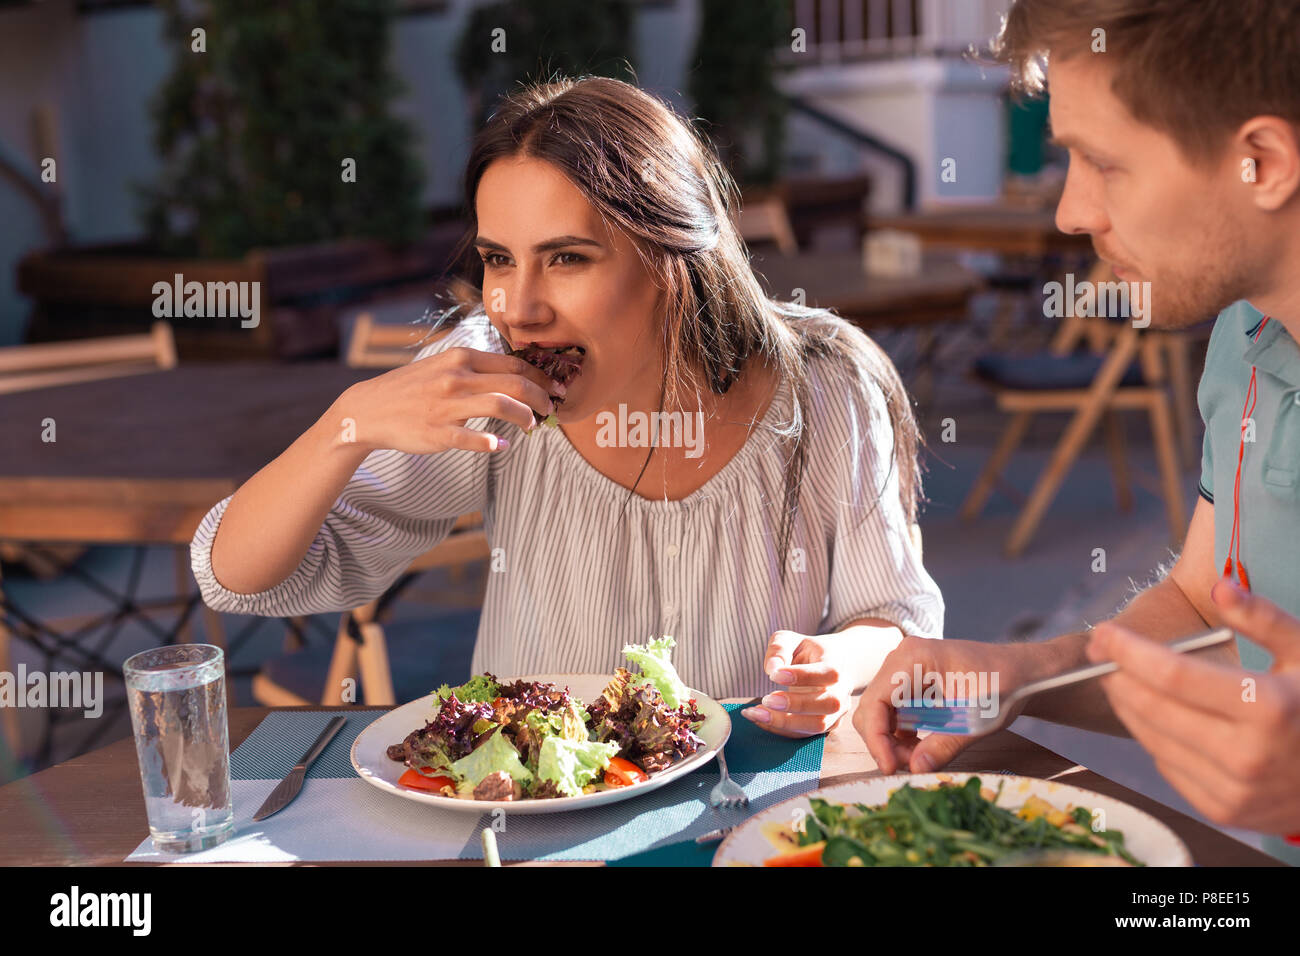 Sun tanned young woman enjoying eating salad Stock Photo